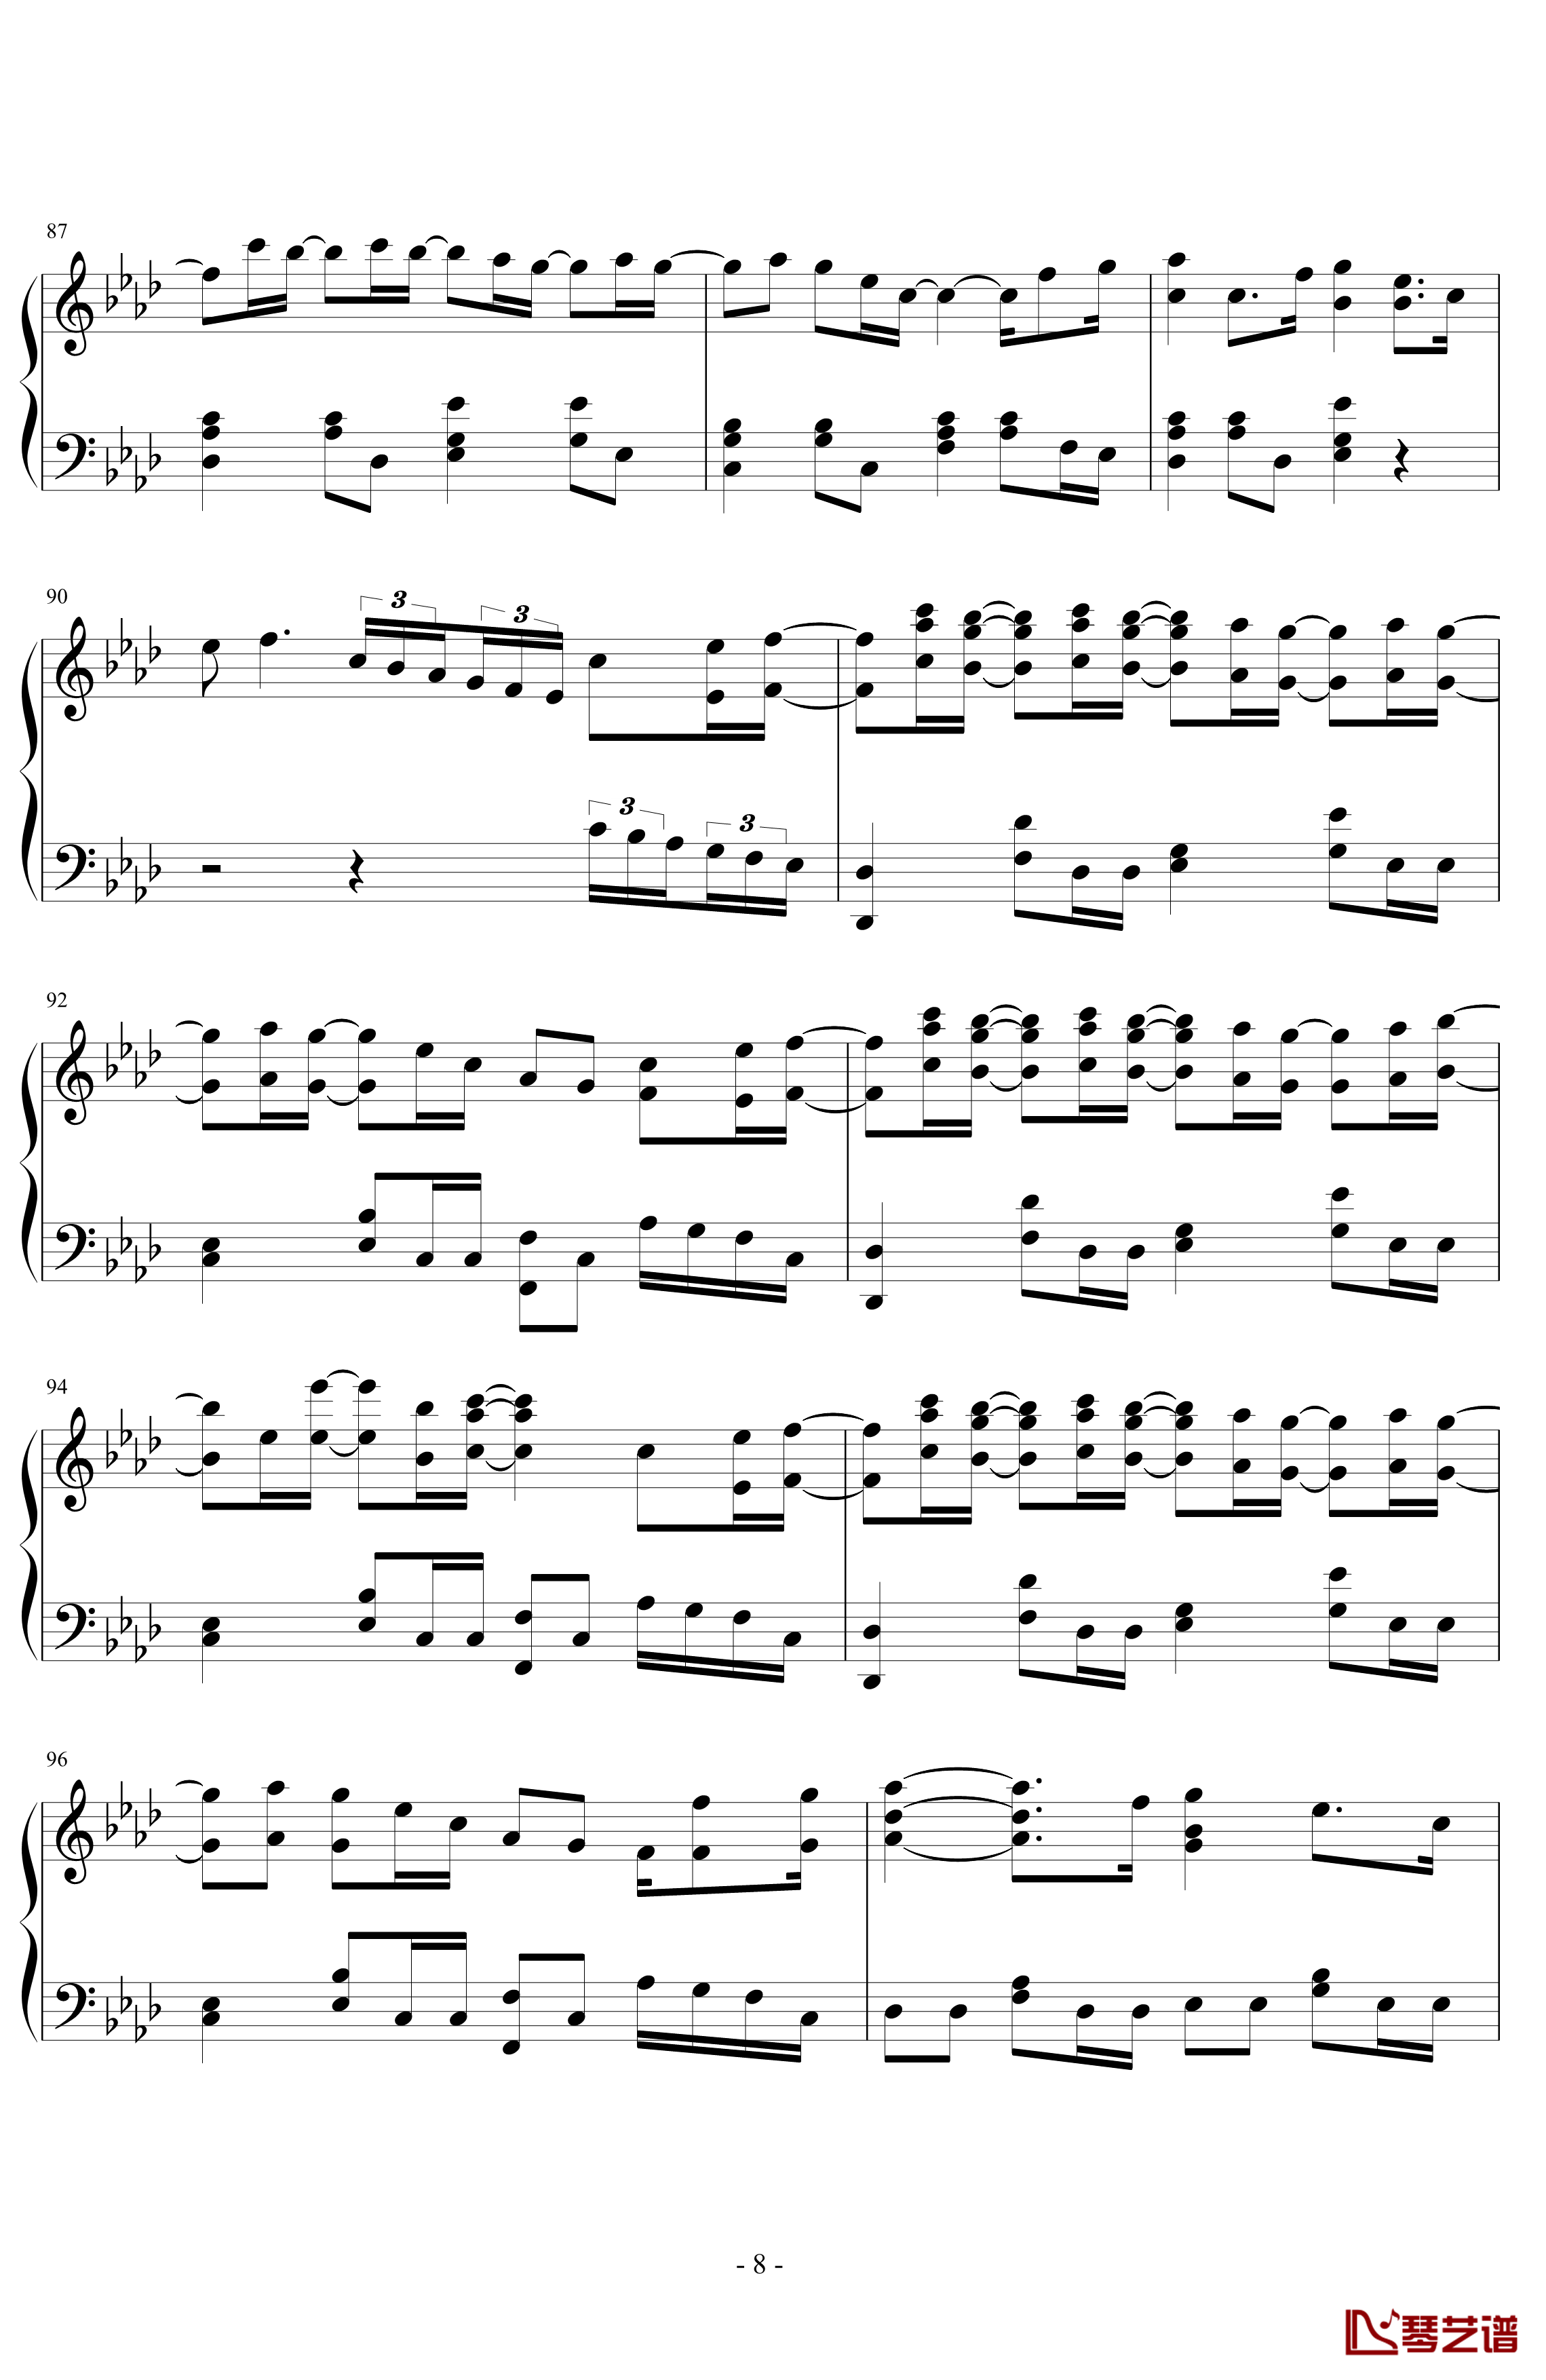 SAKURA钢琴谱-非常好听一首曲子-生物股长8